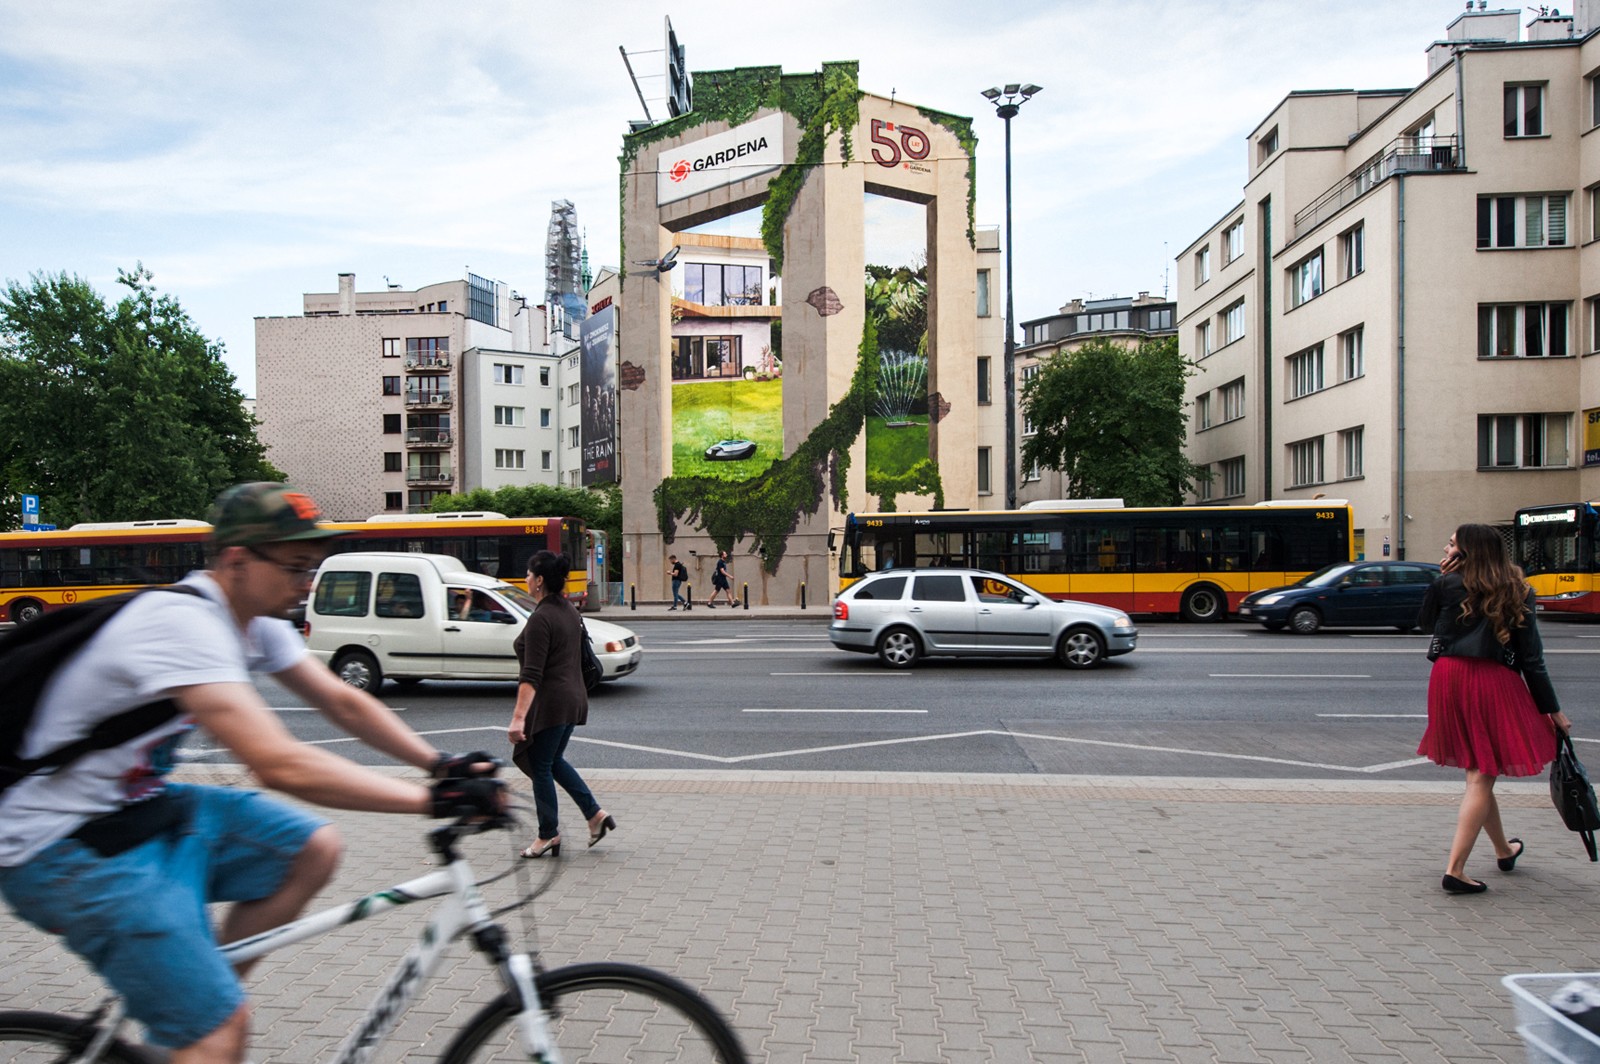 advertising mural for gardena jaworzyńska 8 street Warsaw | Gardena | Portfolio